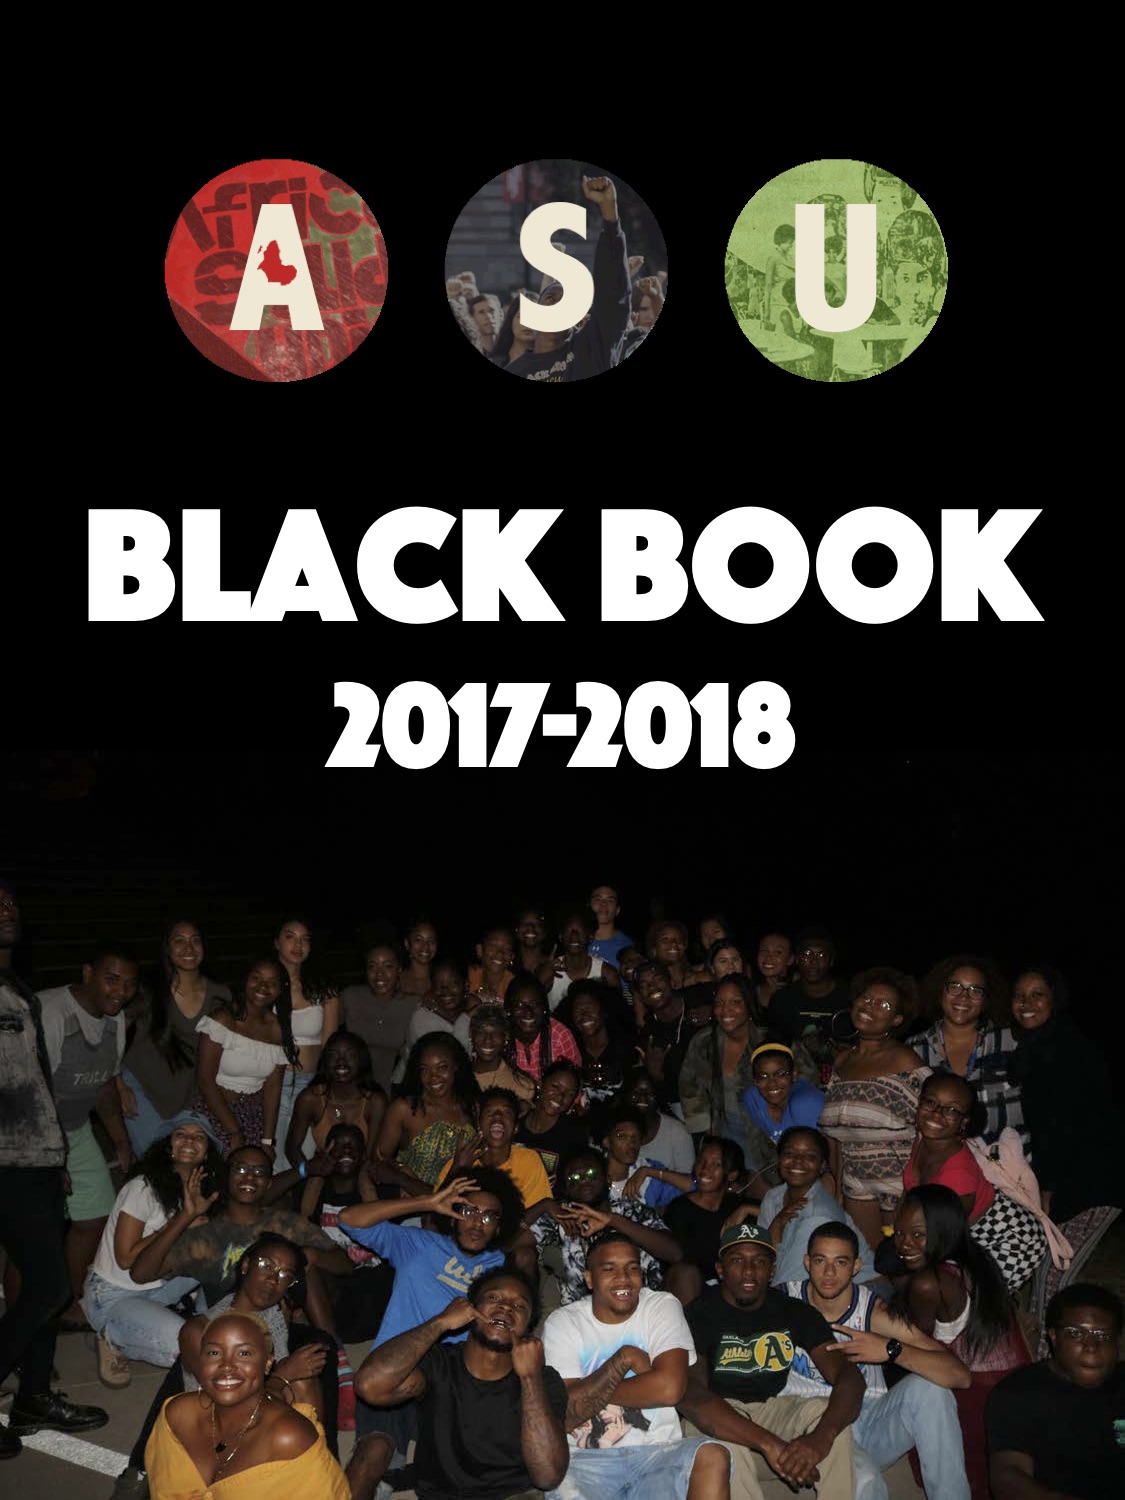 Black Book 1